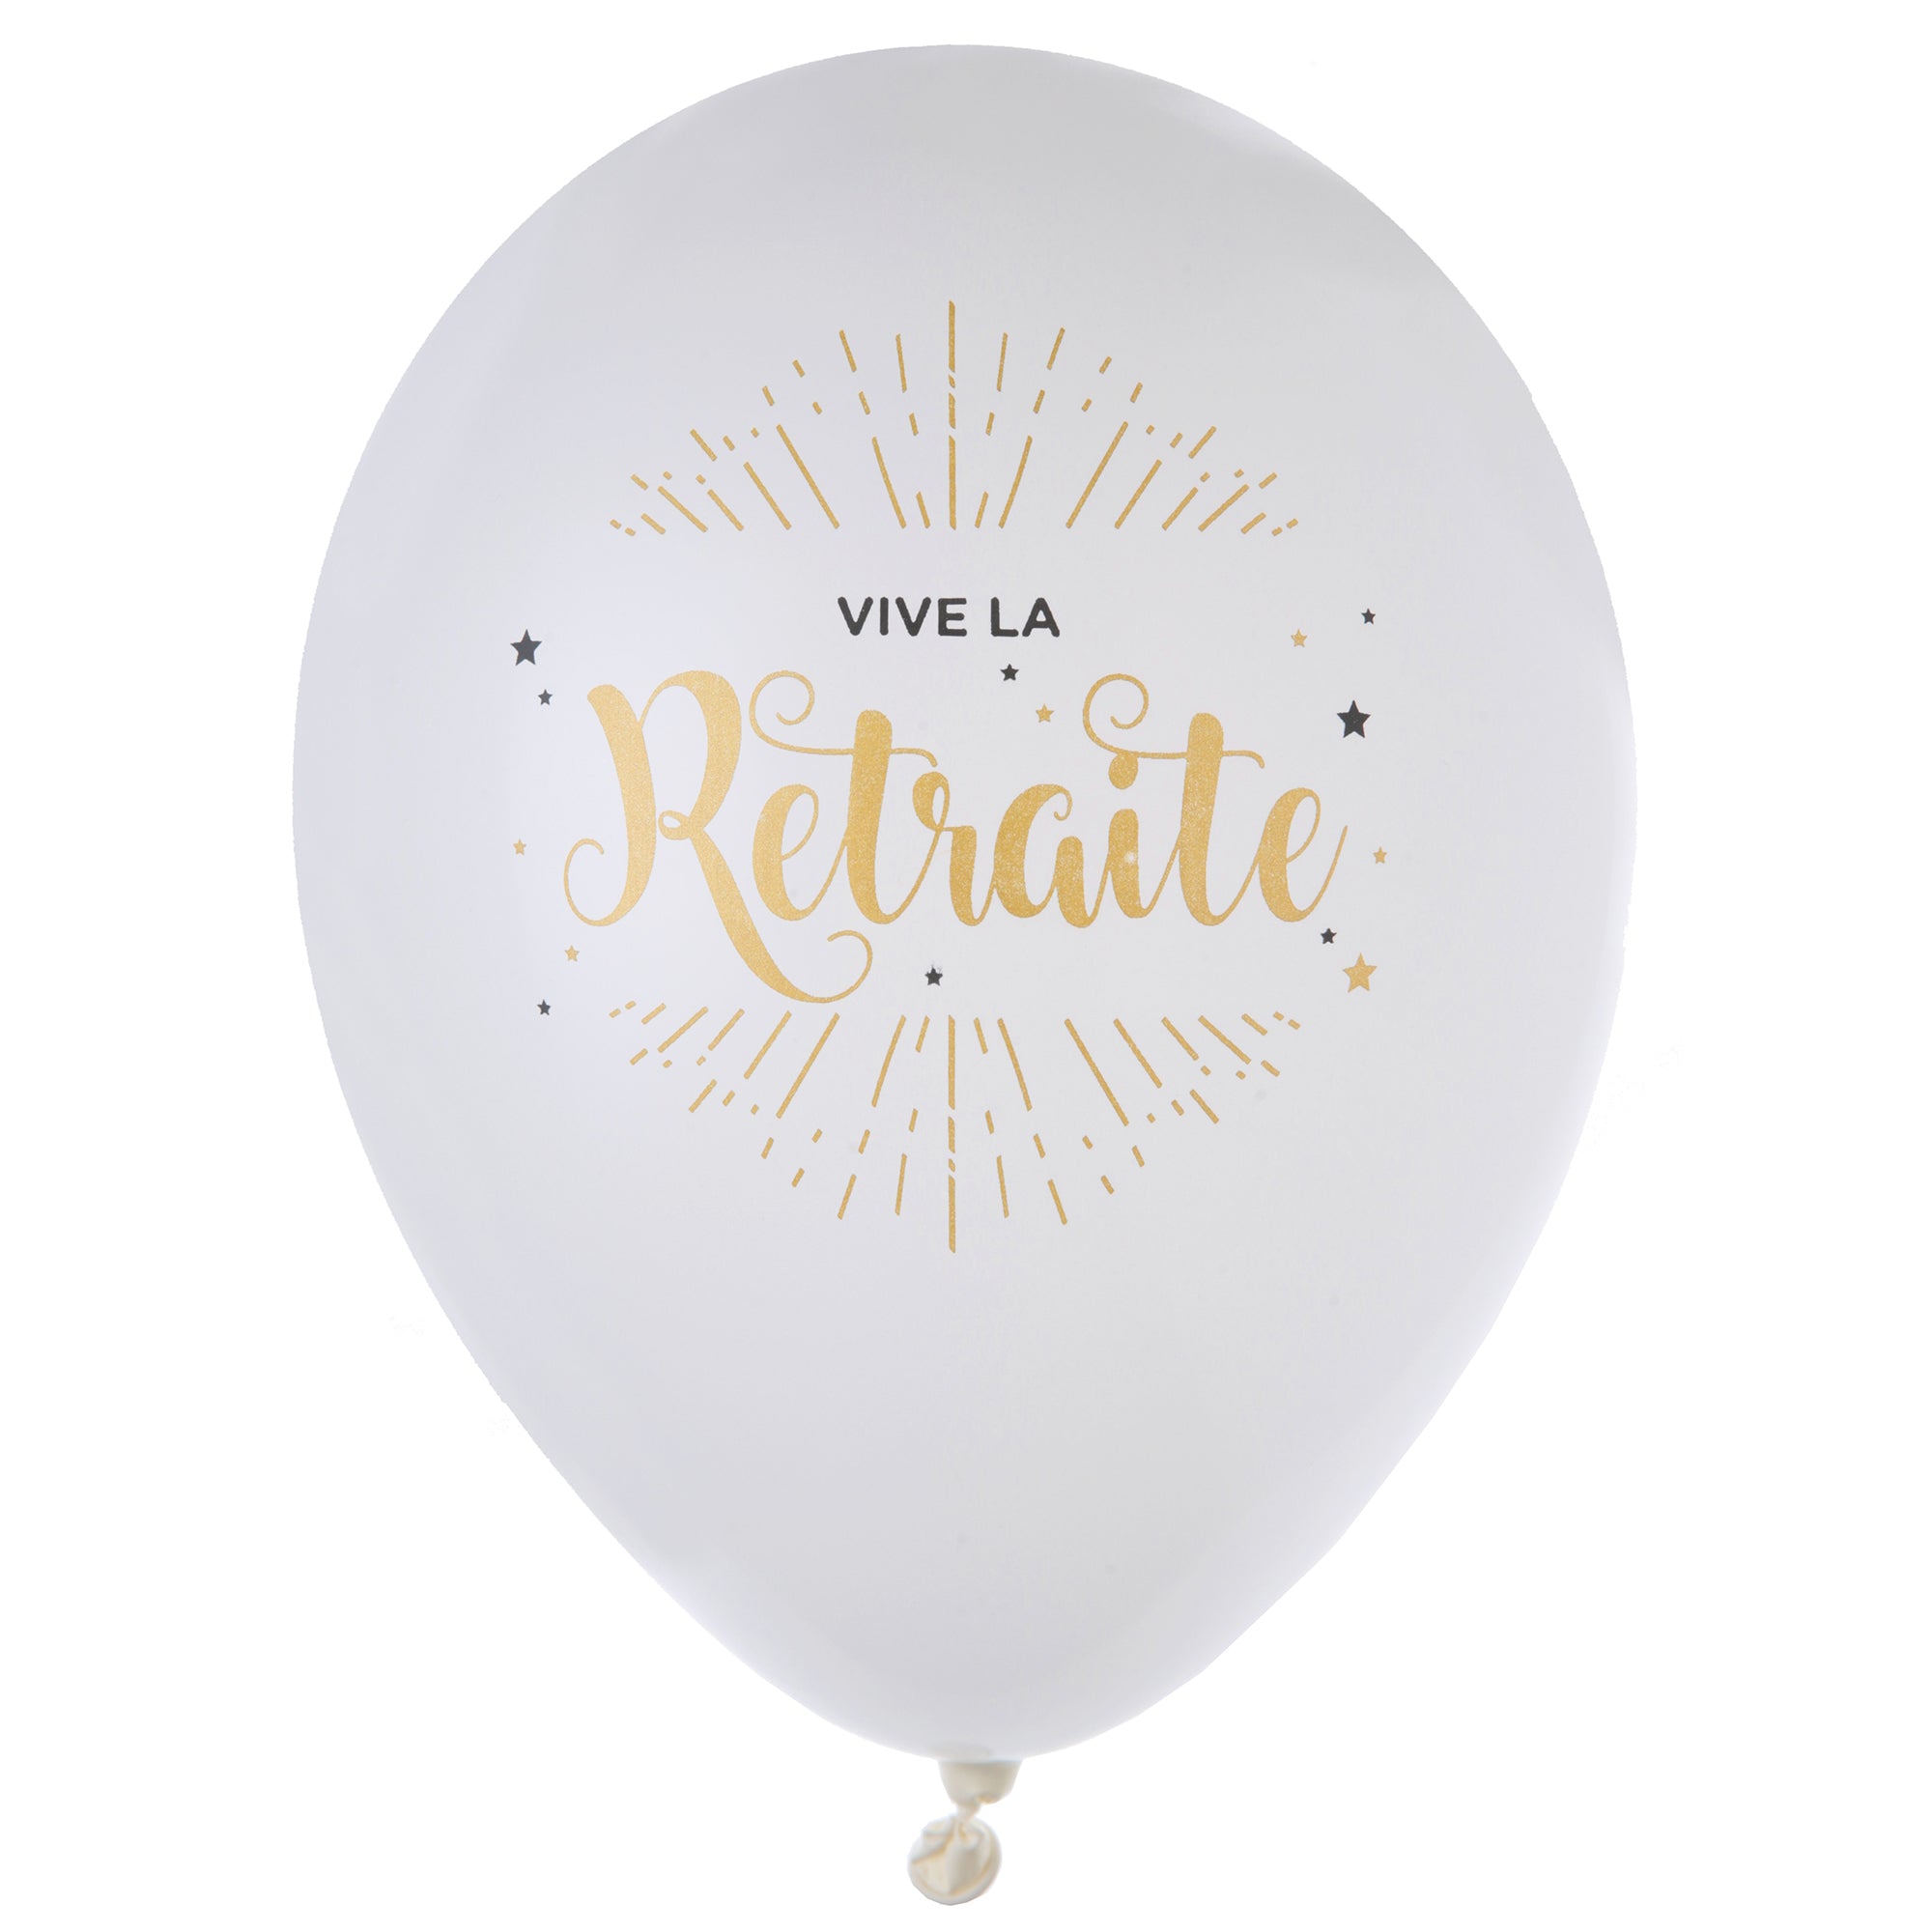 Vive La Retraite 8 White Printed Latex Balloons 9in